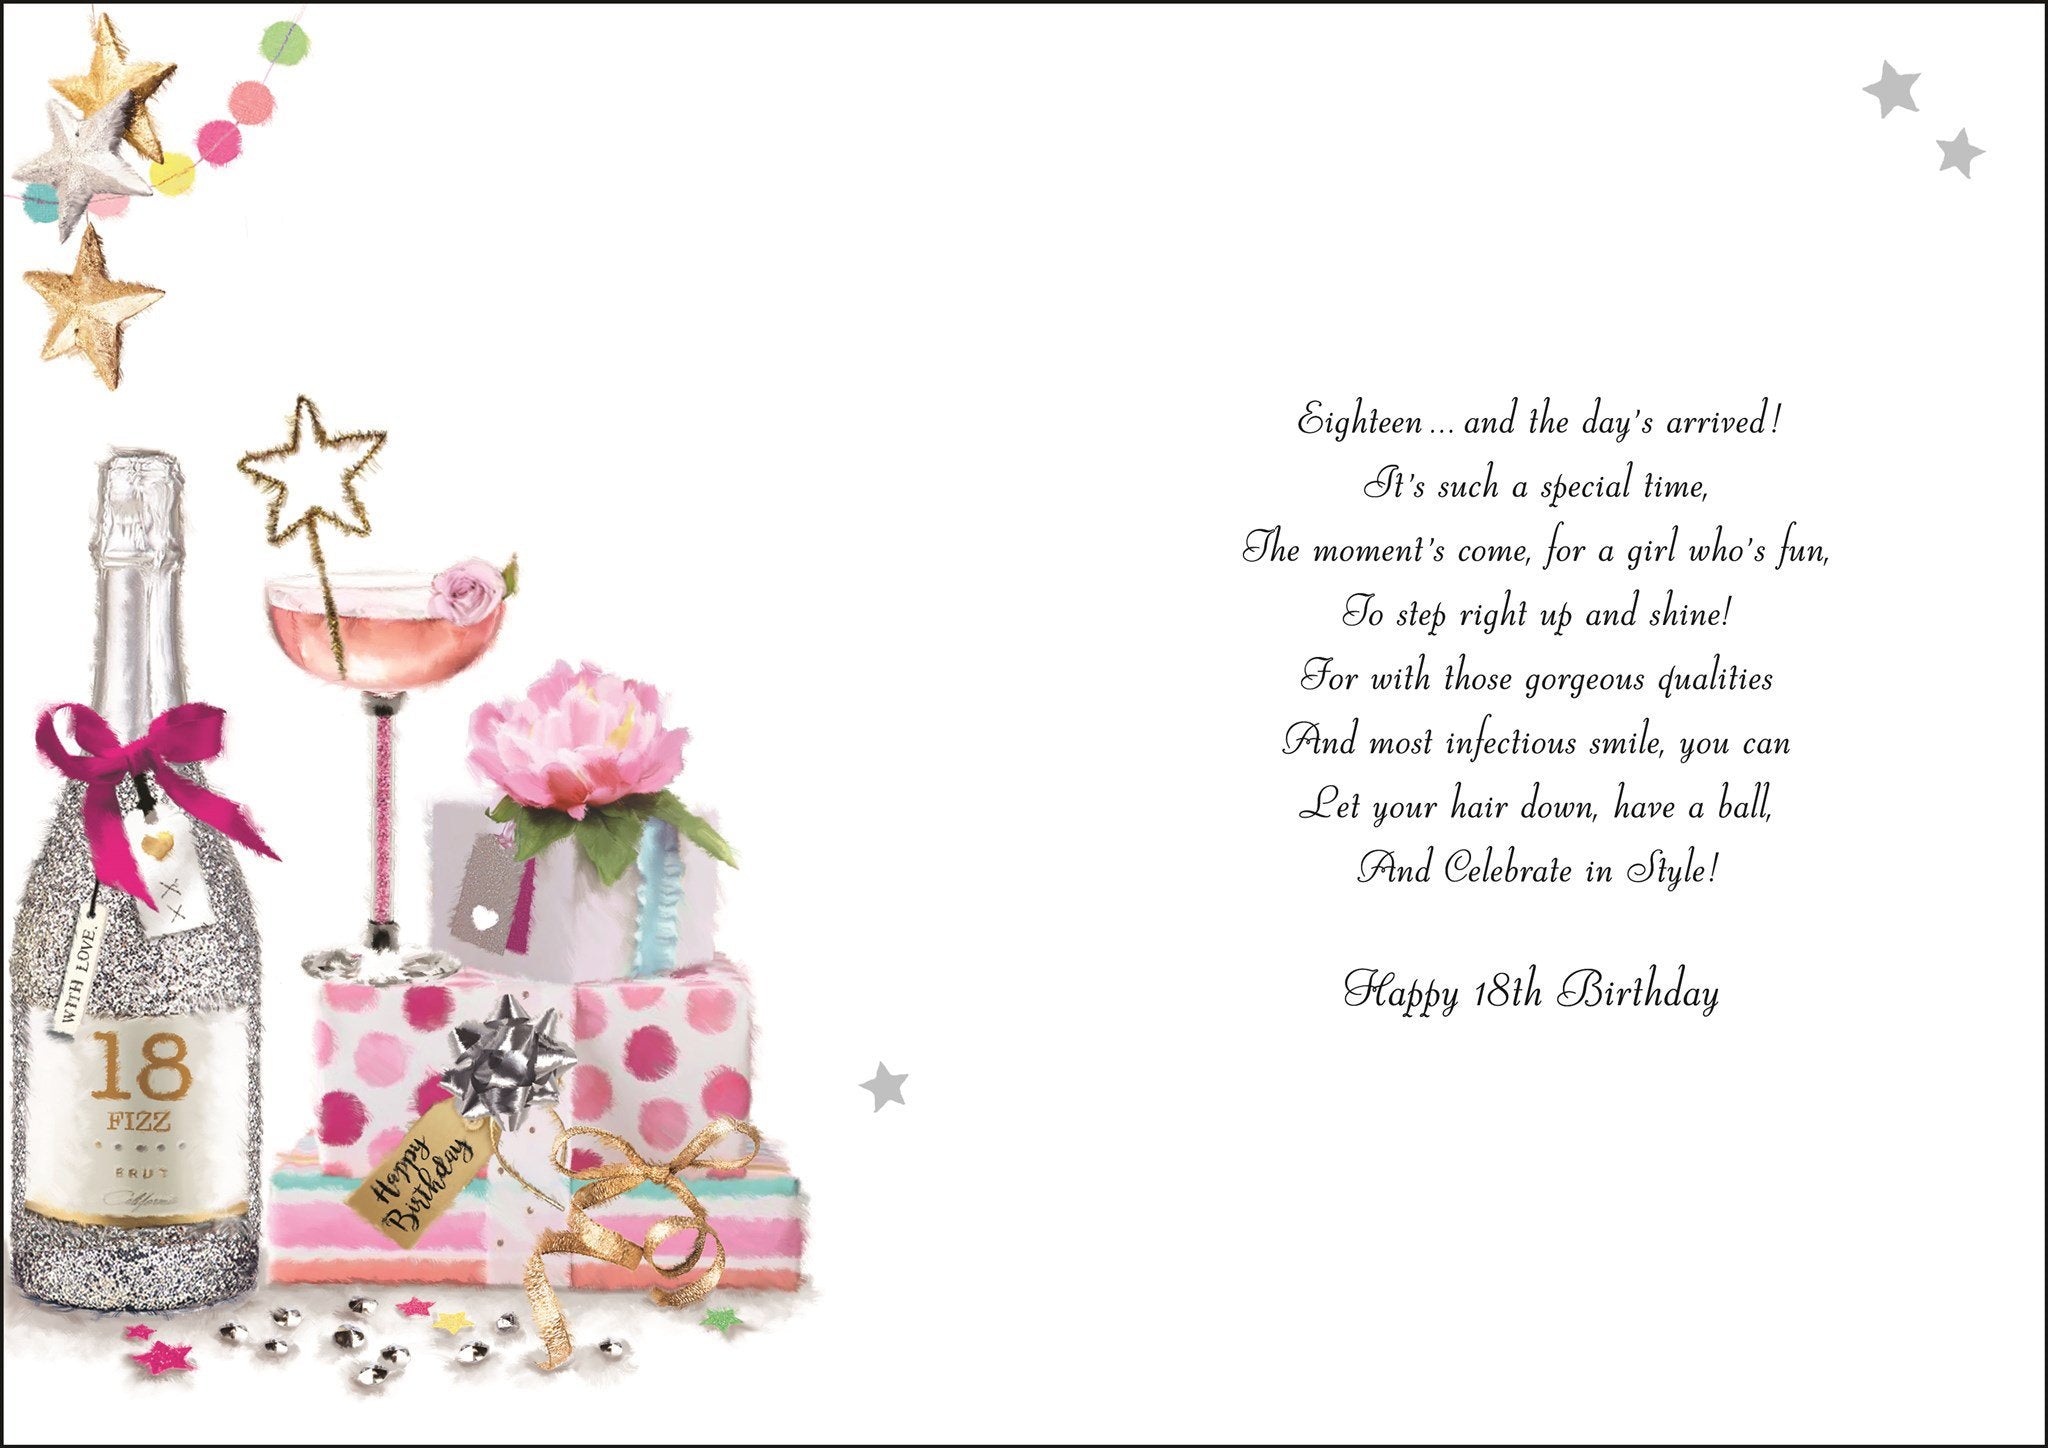 Inside of 18th Birthday Glitter Bottle Birthday Greetings Card